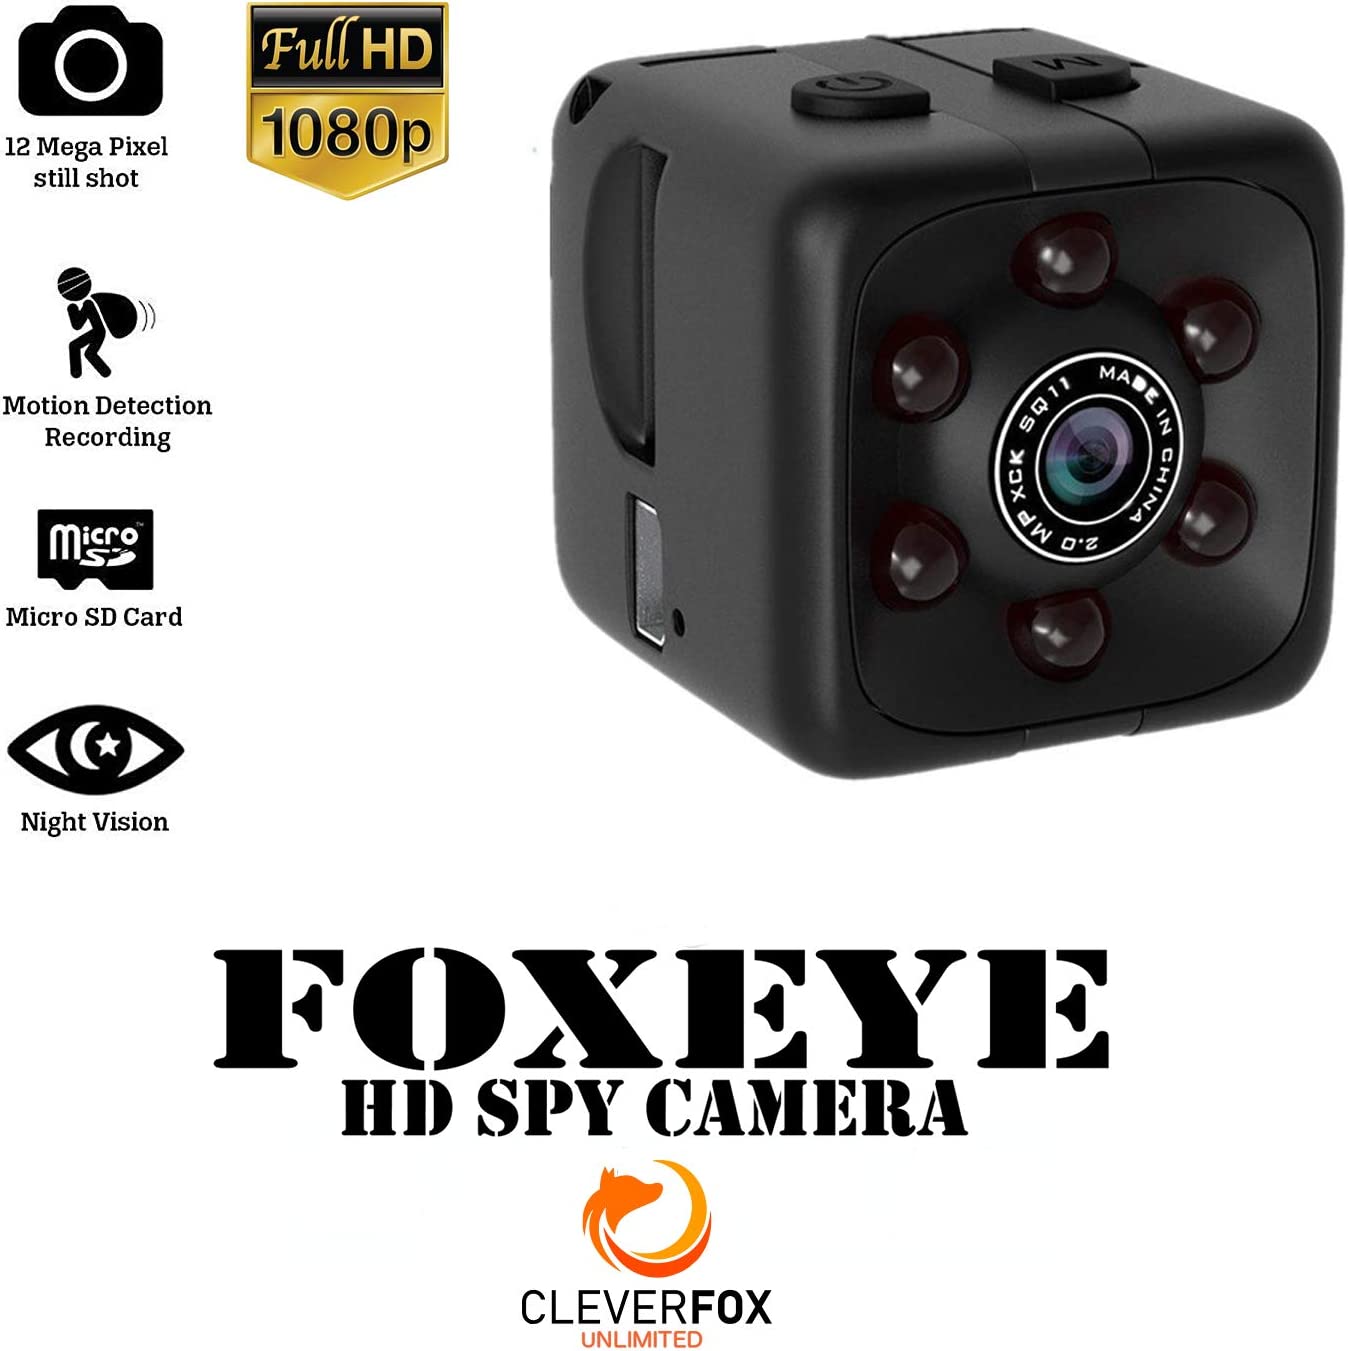 Mini cámara espía con audio y video - Cámara oculta 1080P - Cámara